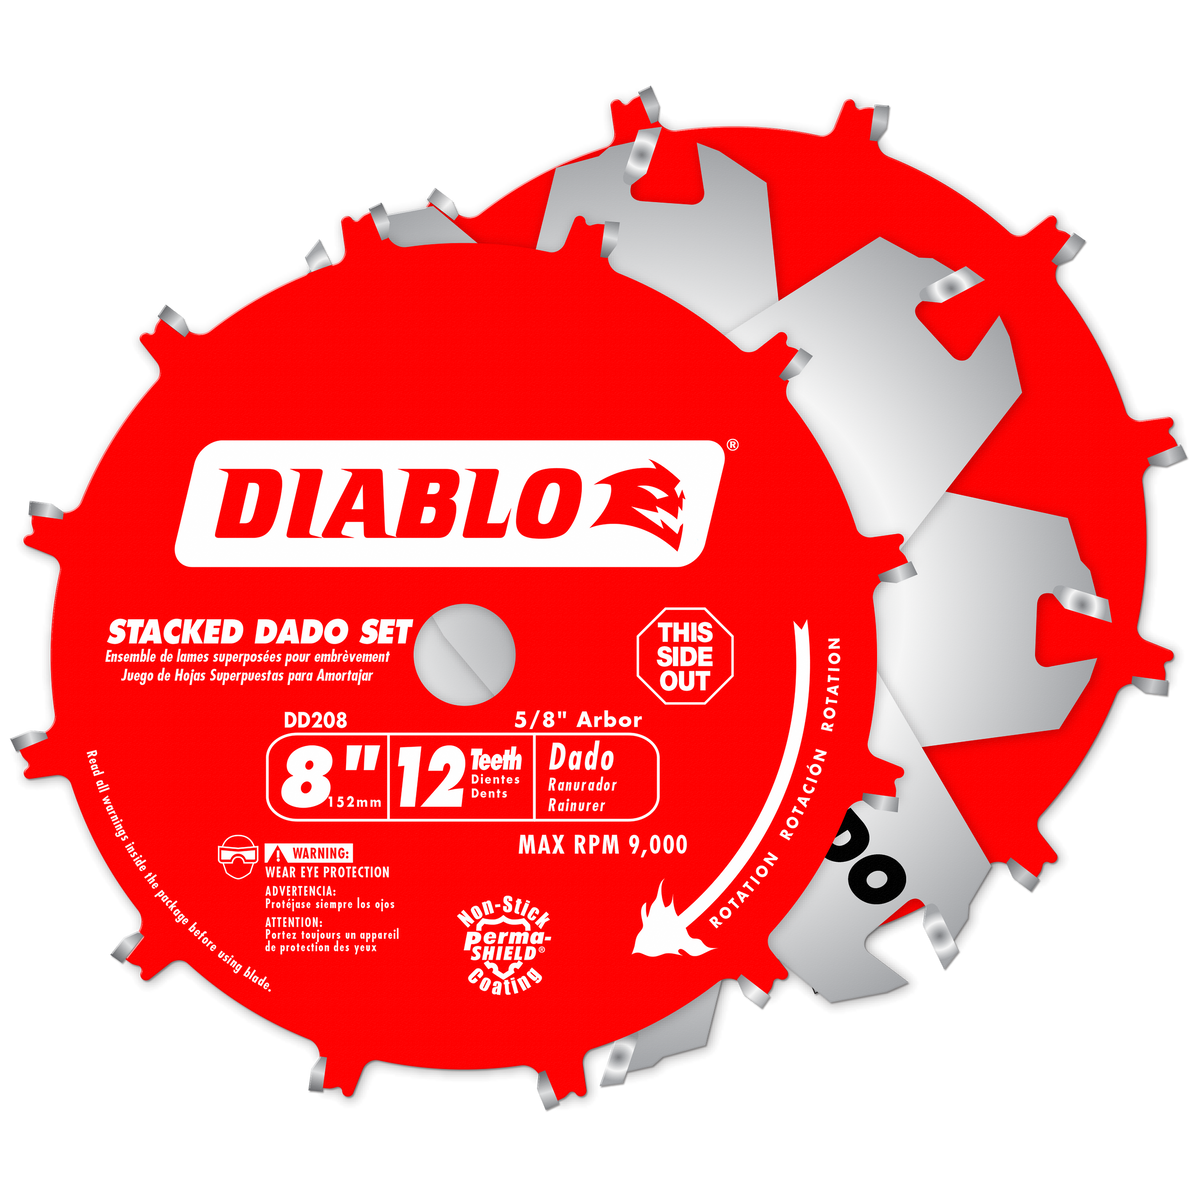 Diablo Carbide Stacked Dado Saw Blade Set